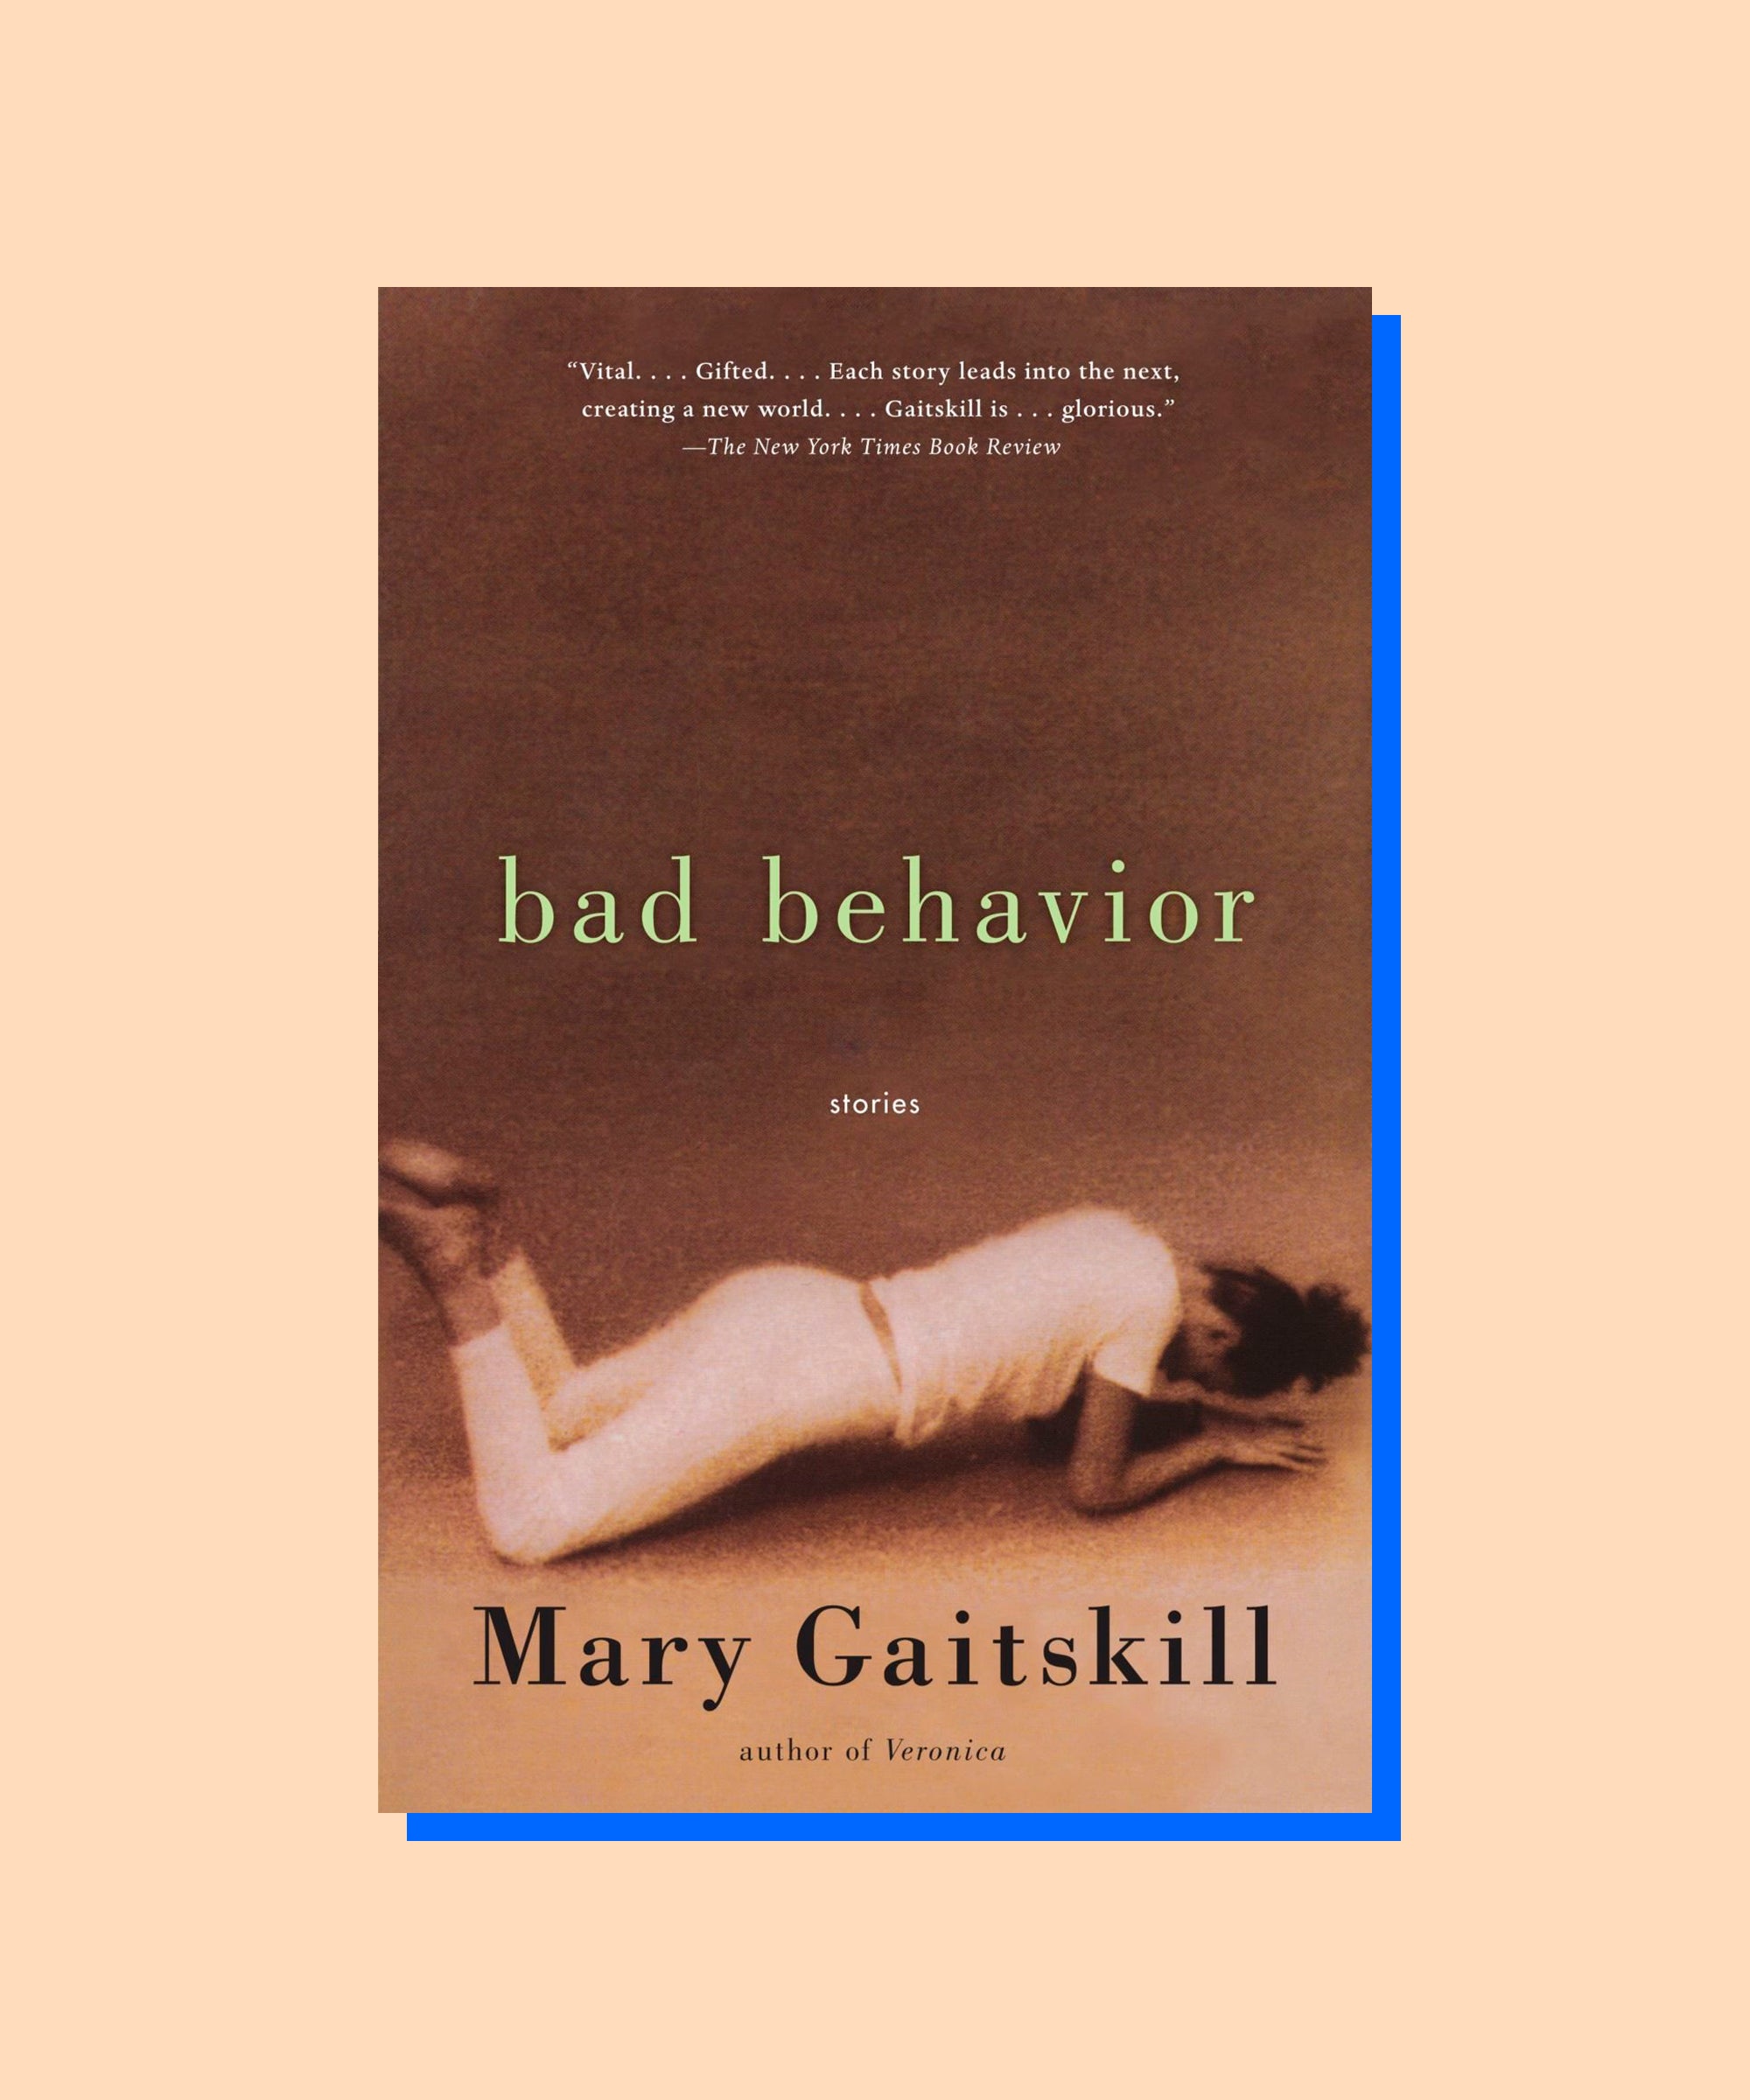 Bad behavior book sex scenes